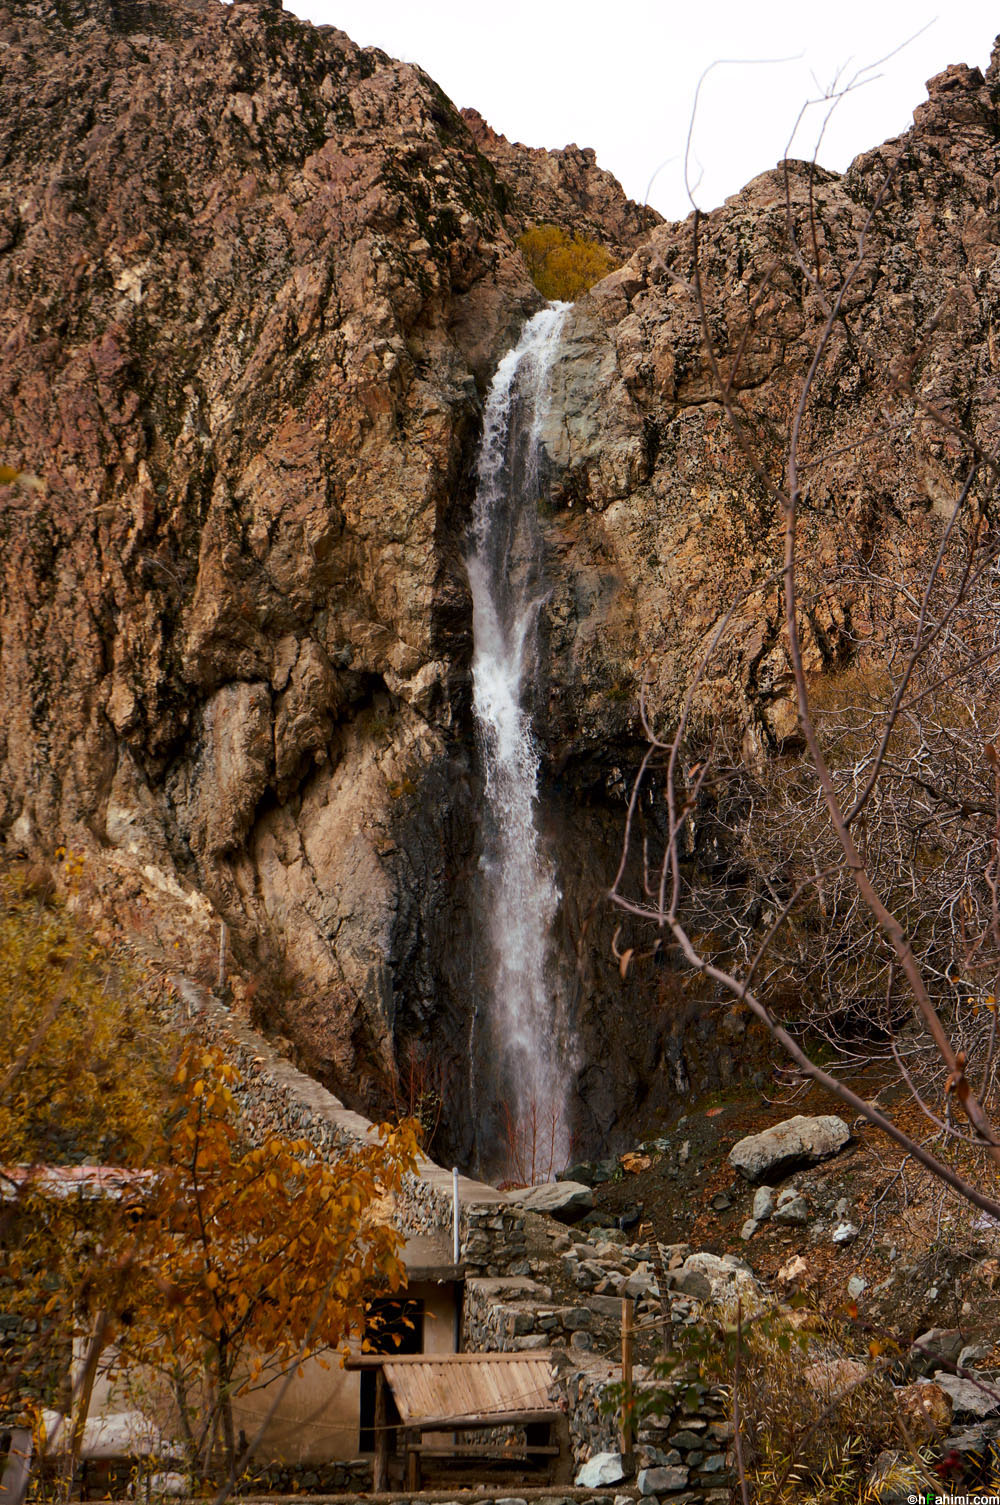 band-e-abdollah waterfall